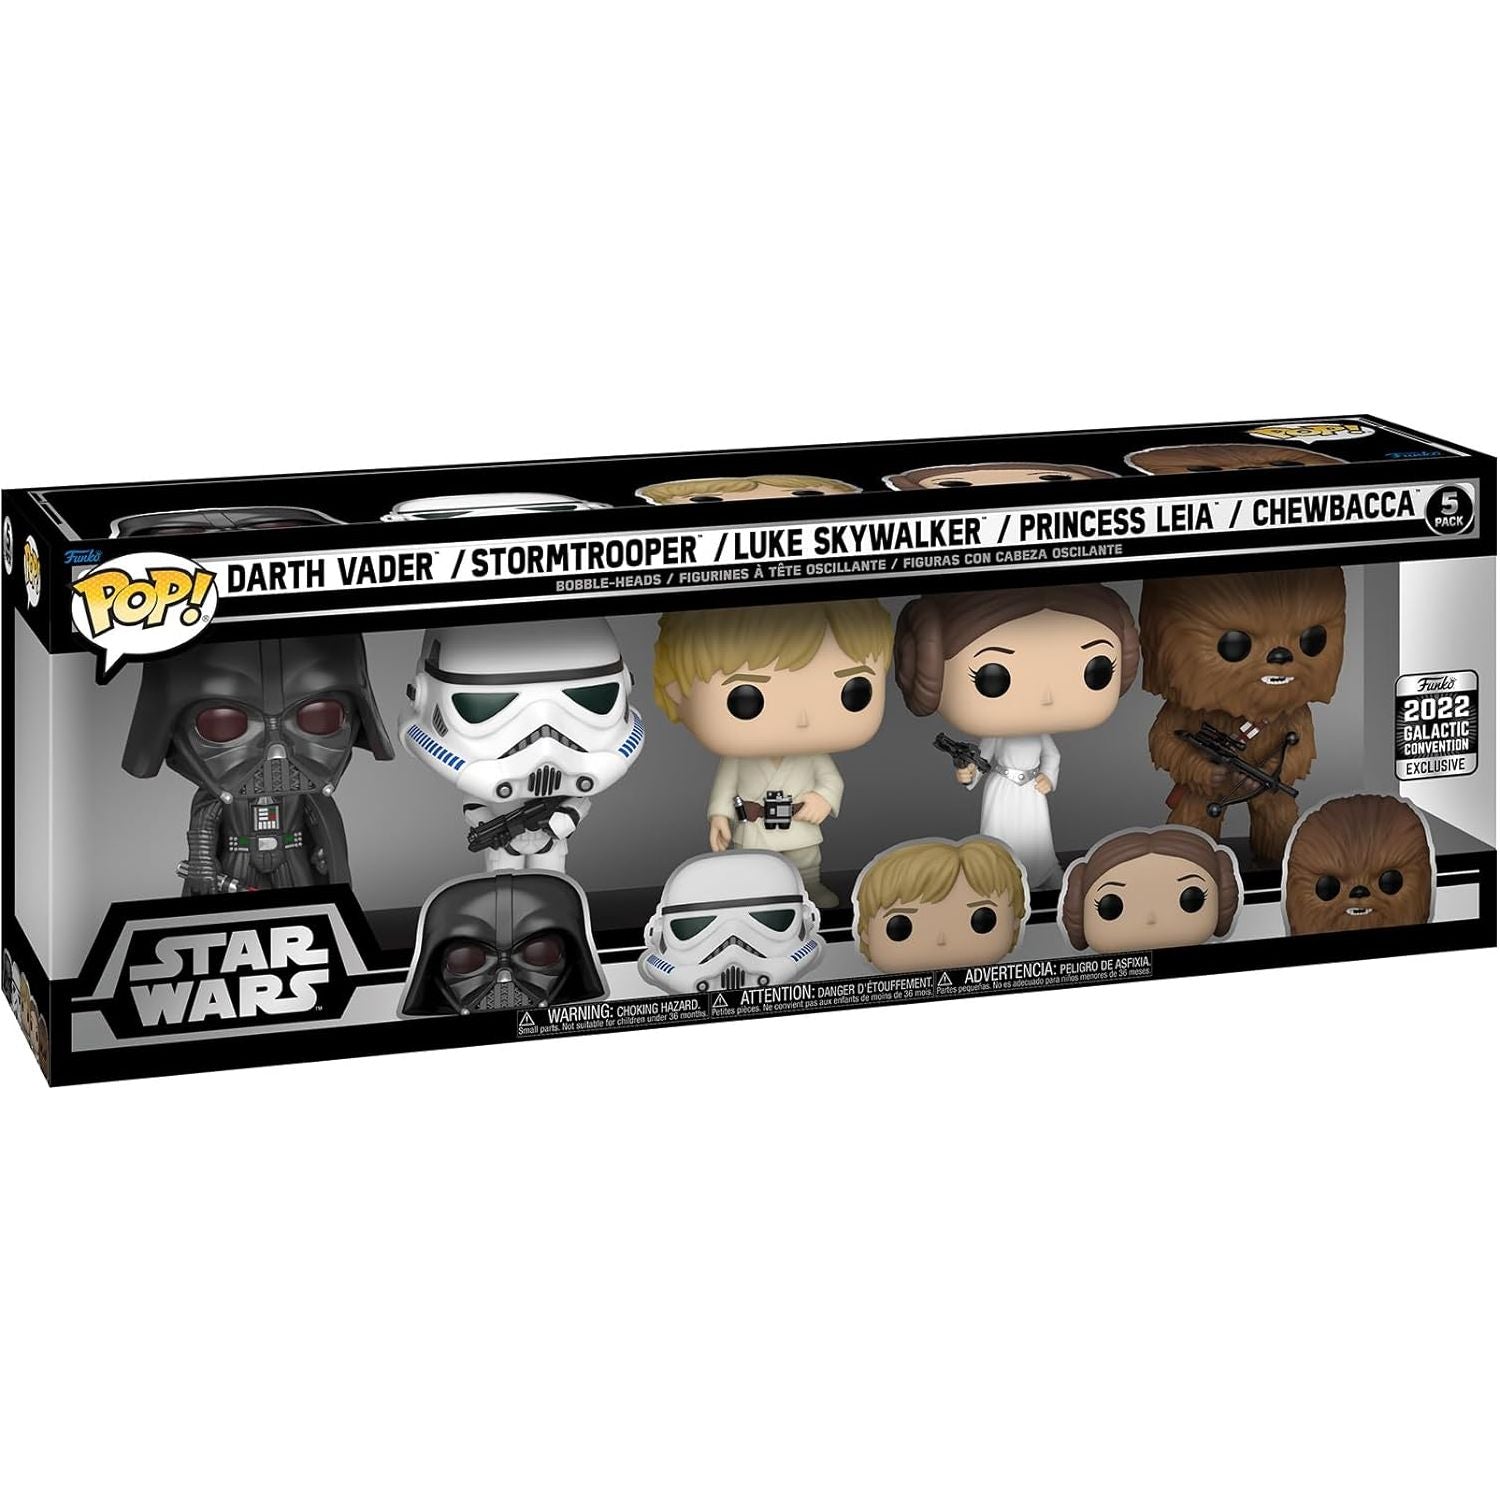 Funko Pop! Vinyl: Star Wars - Darth Vader, Stormtrooper, Luke Skywalker, Princess Leia and Chewbacca - 5 Pack